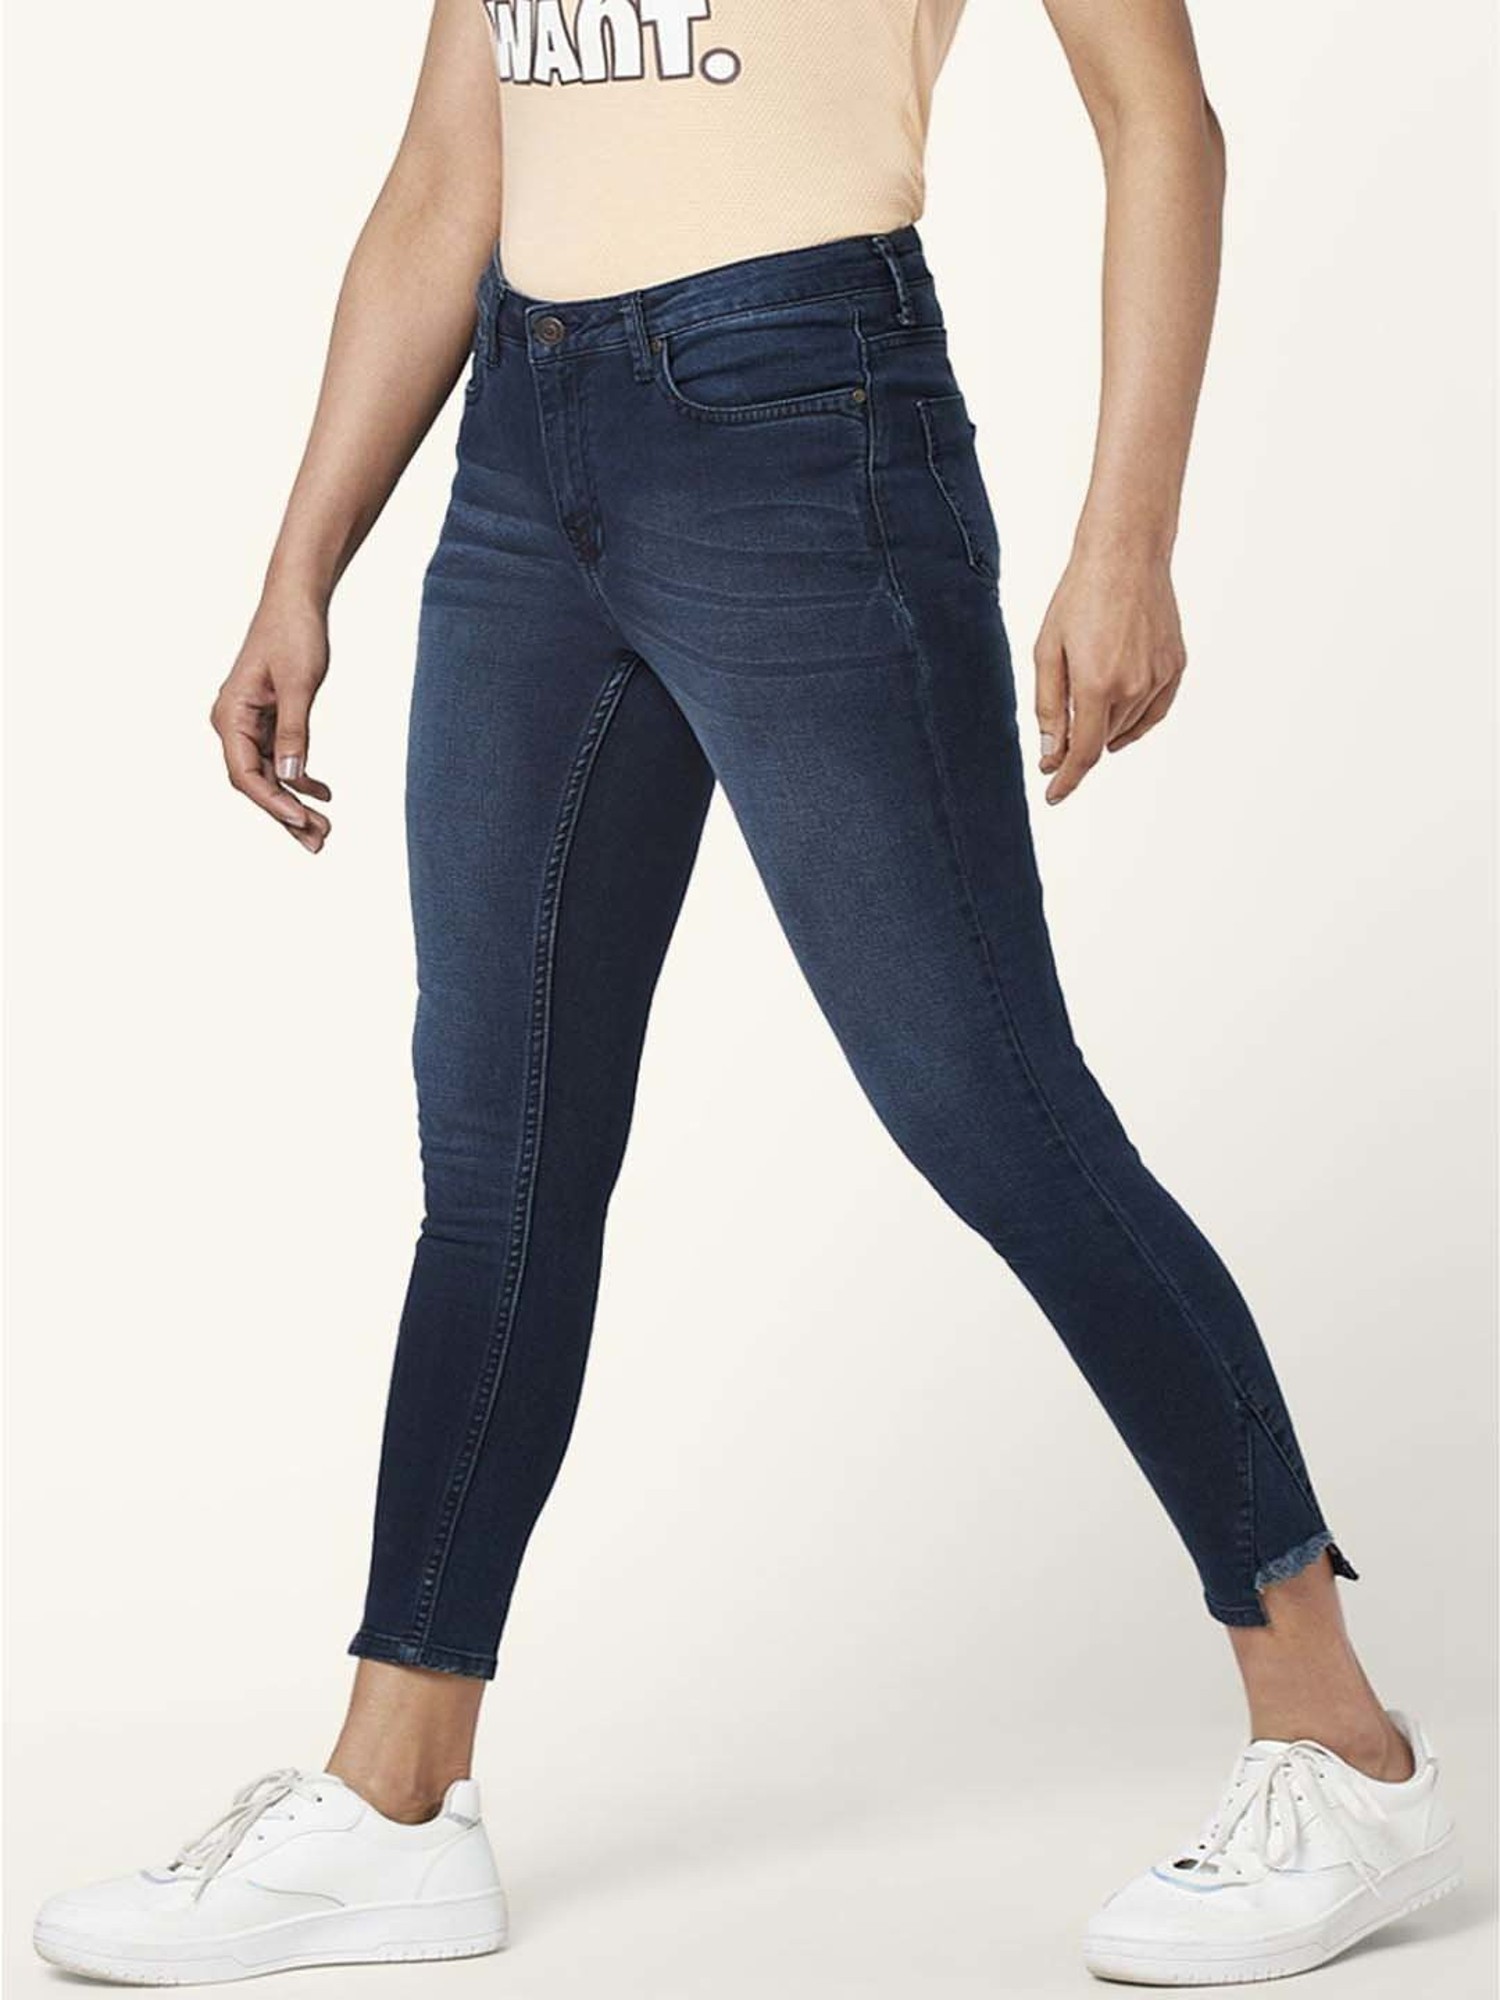 Pantaloons Women Solid Blue Jeans - Selling Fast at Pantaloons.com